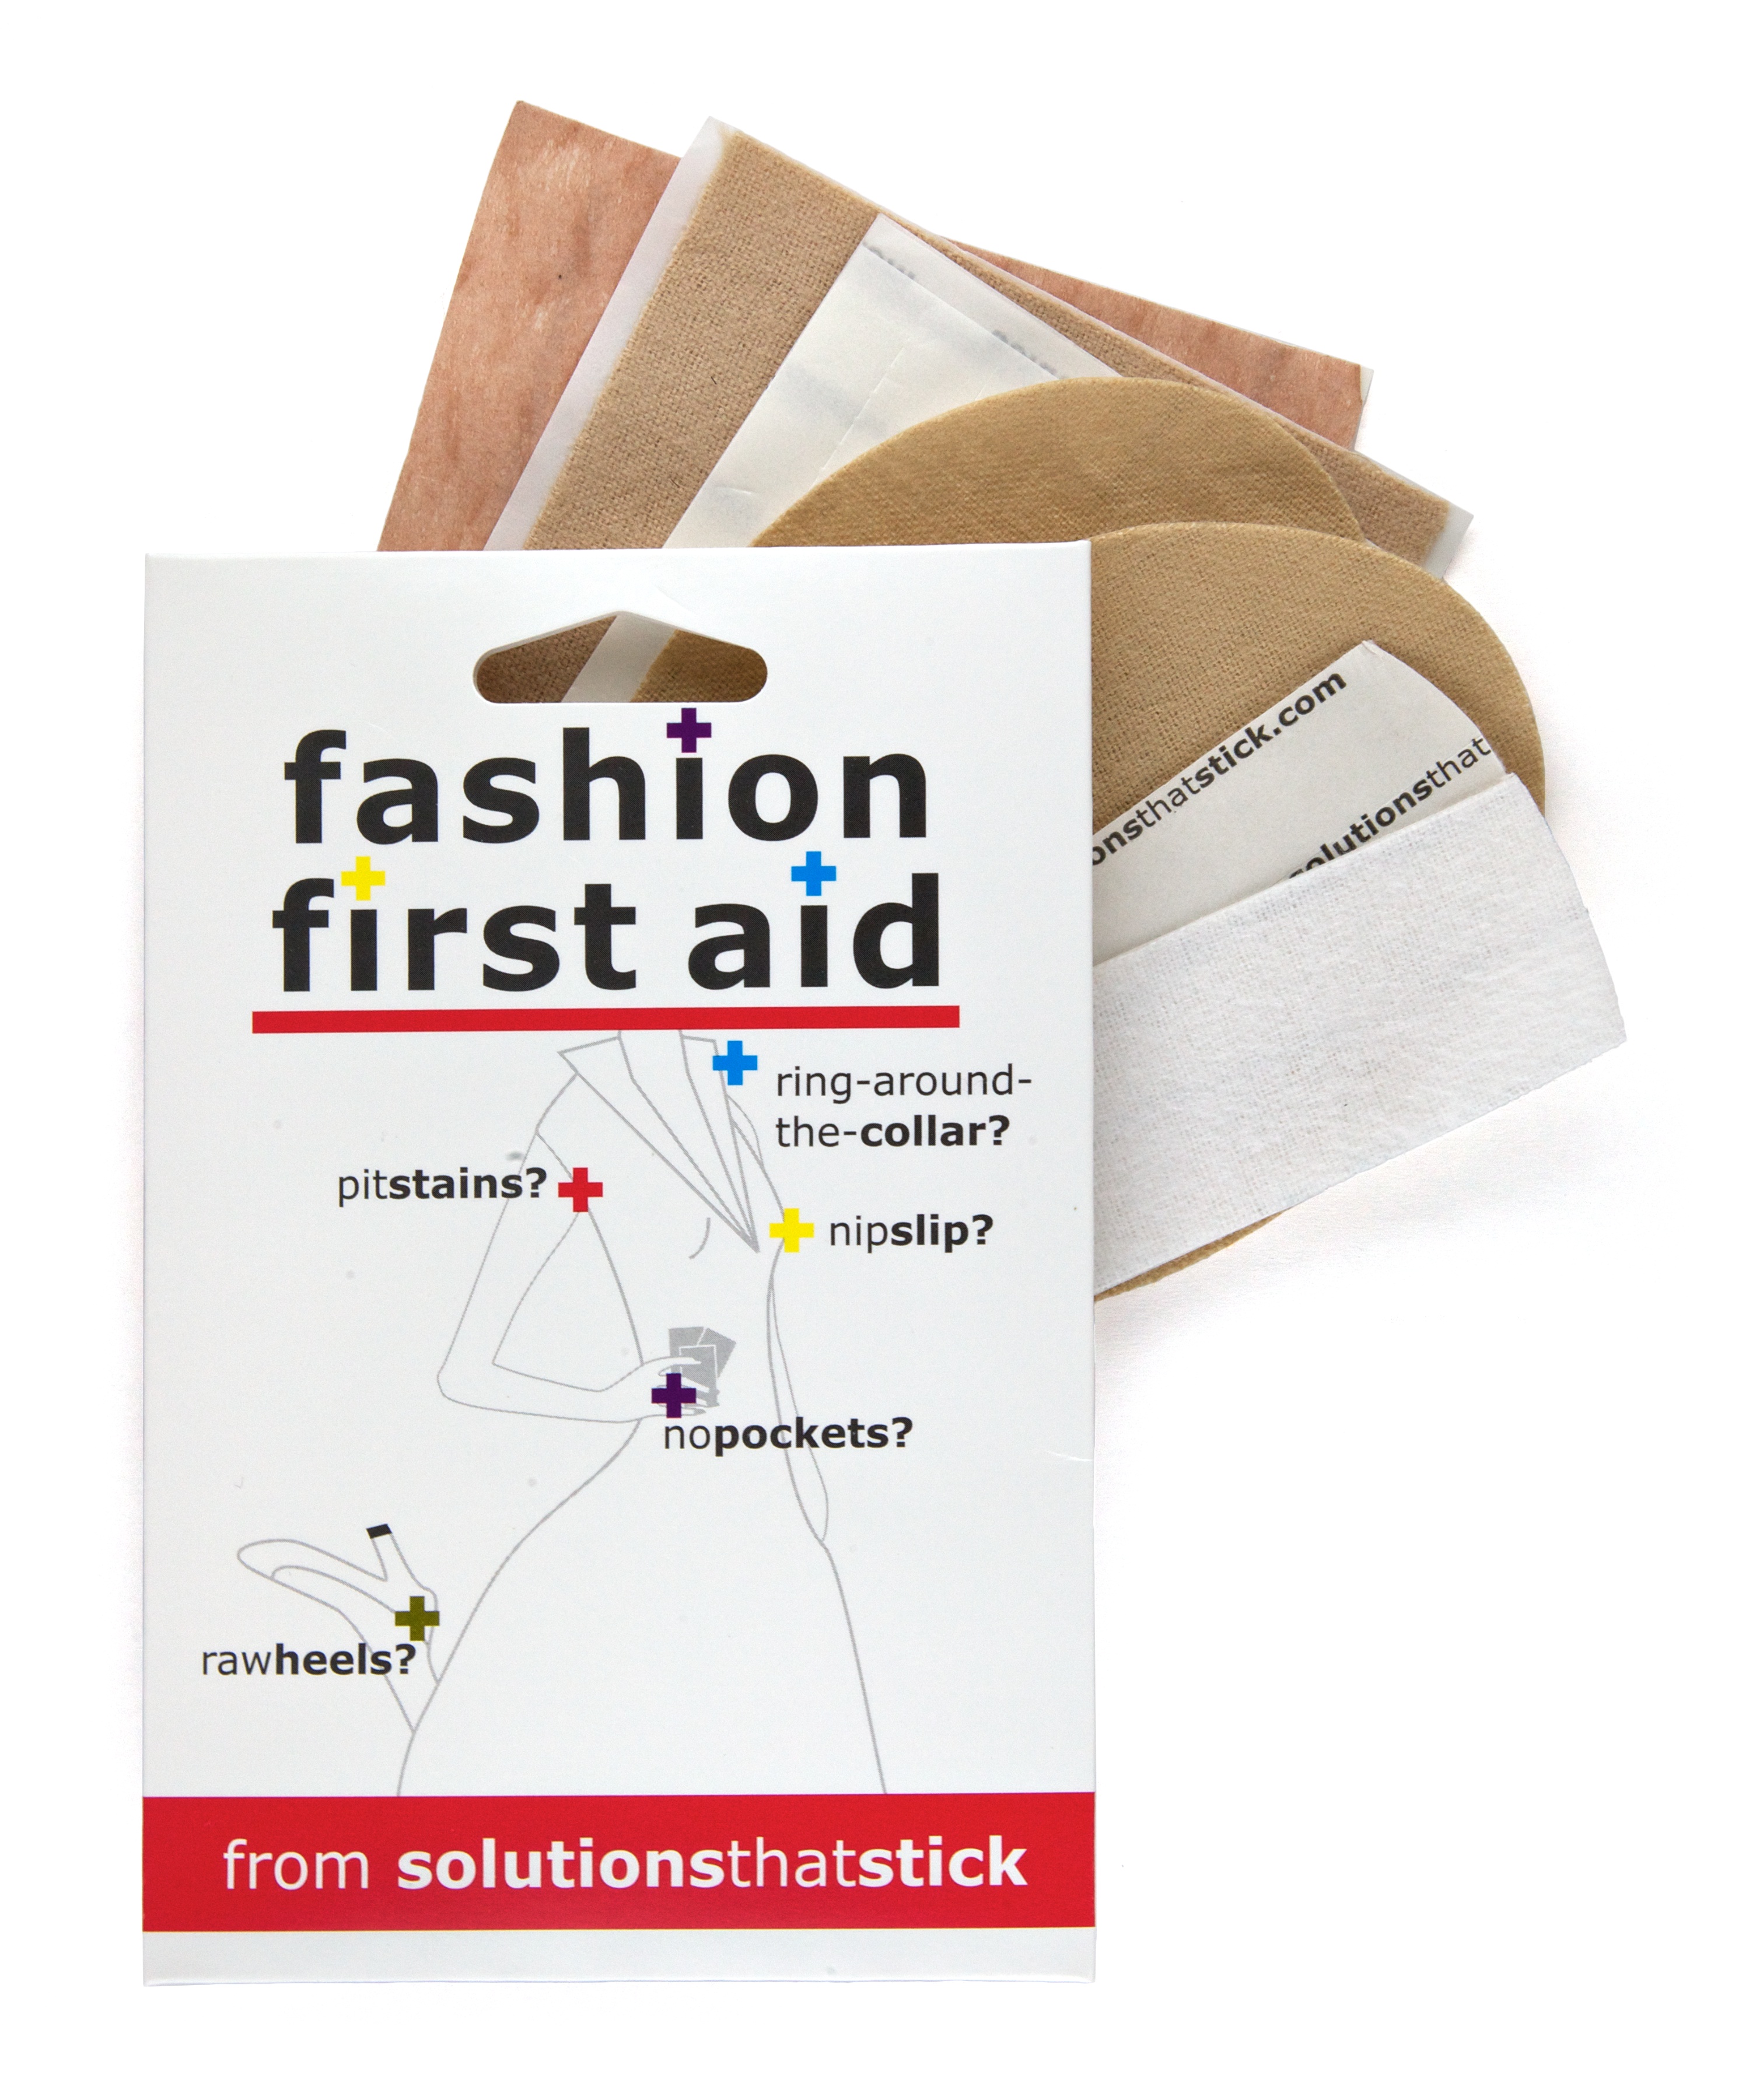 Fashion First Aid kit prevents every Fashion Emergency